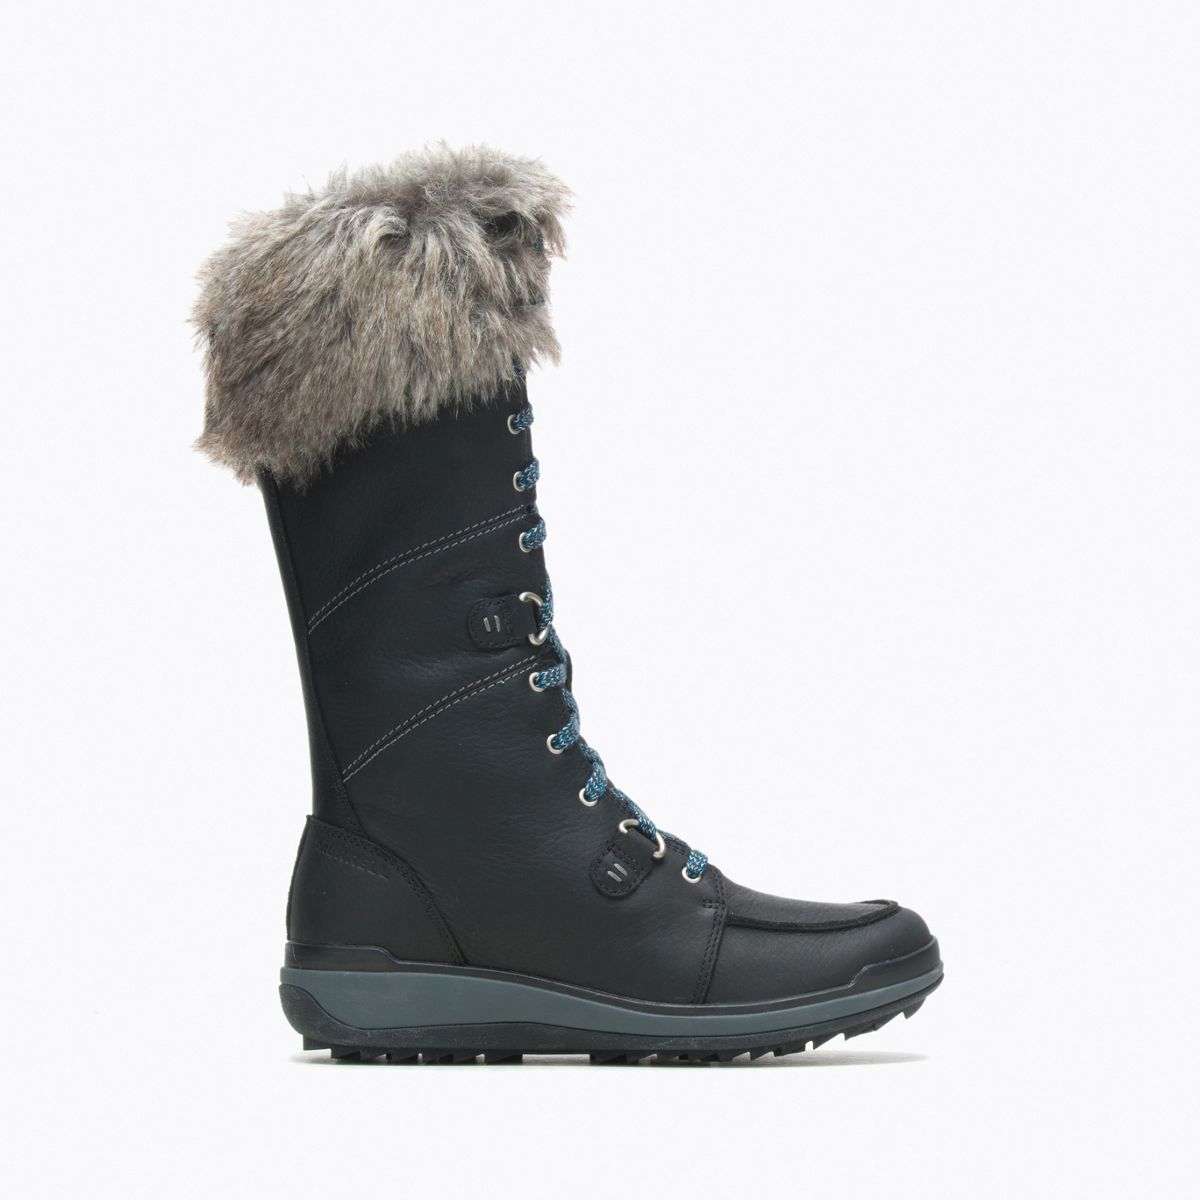 Merrell Roam Peak Polar Waterproof Boots - Women's